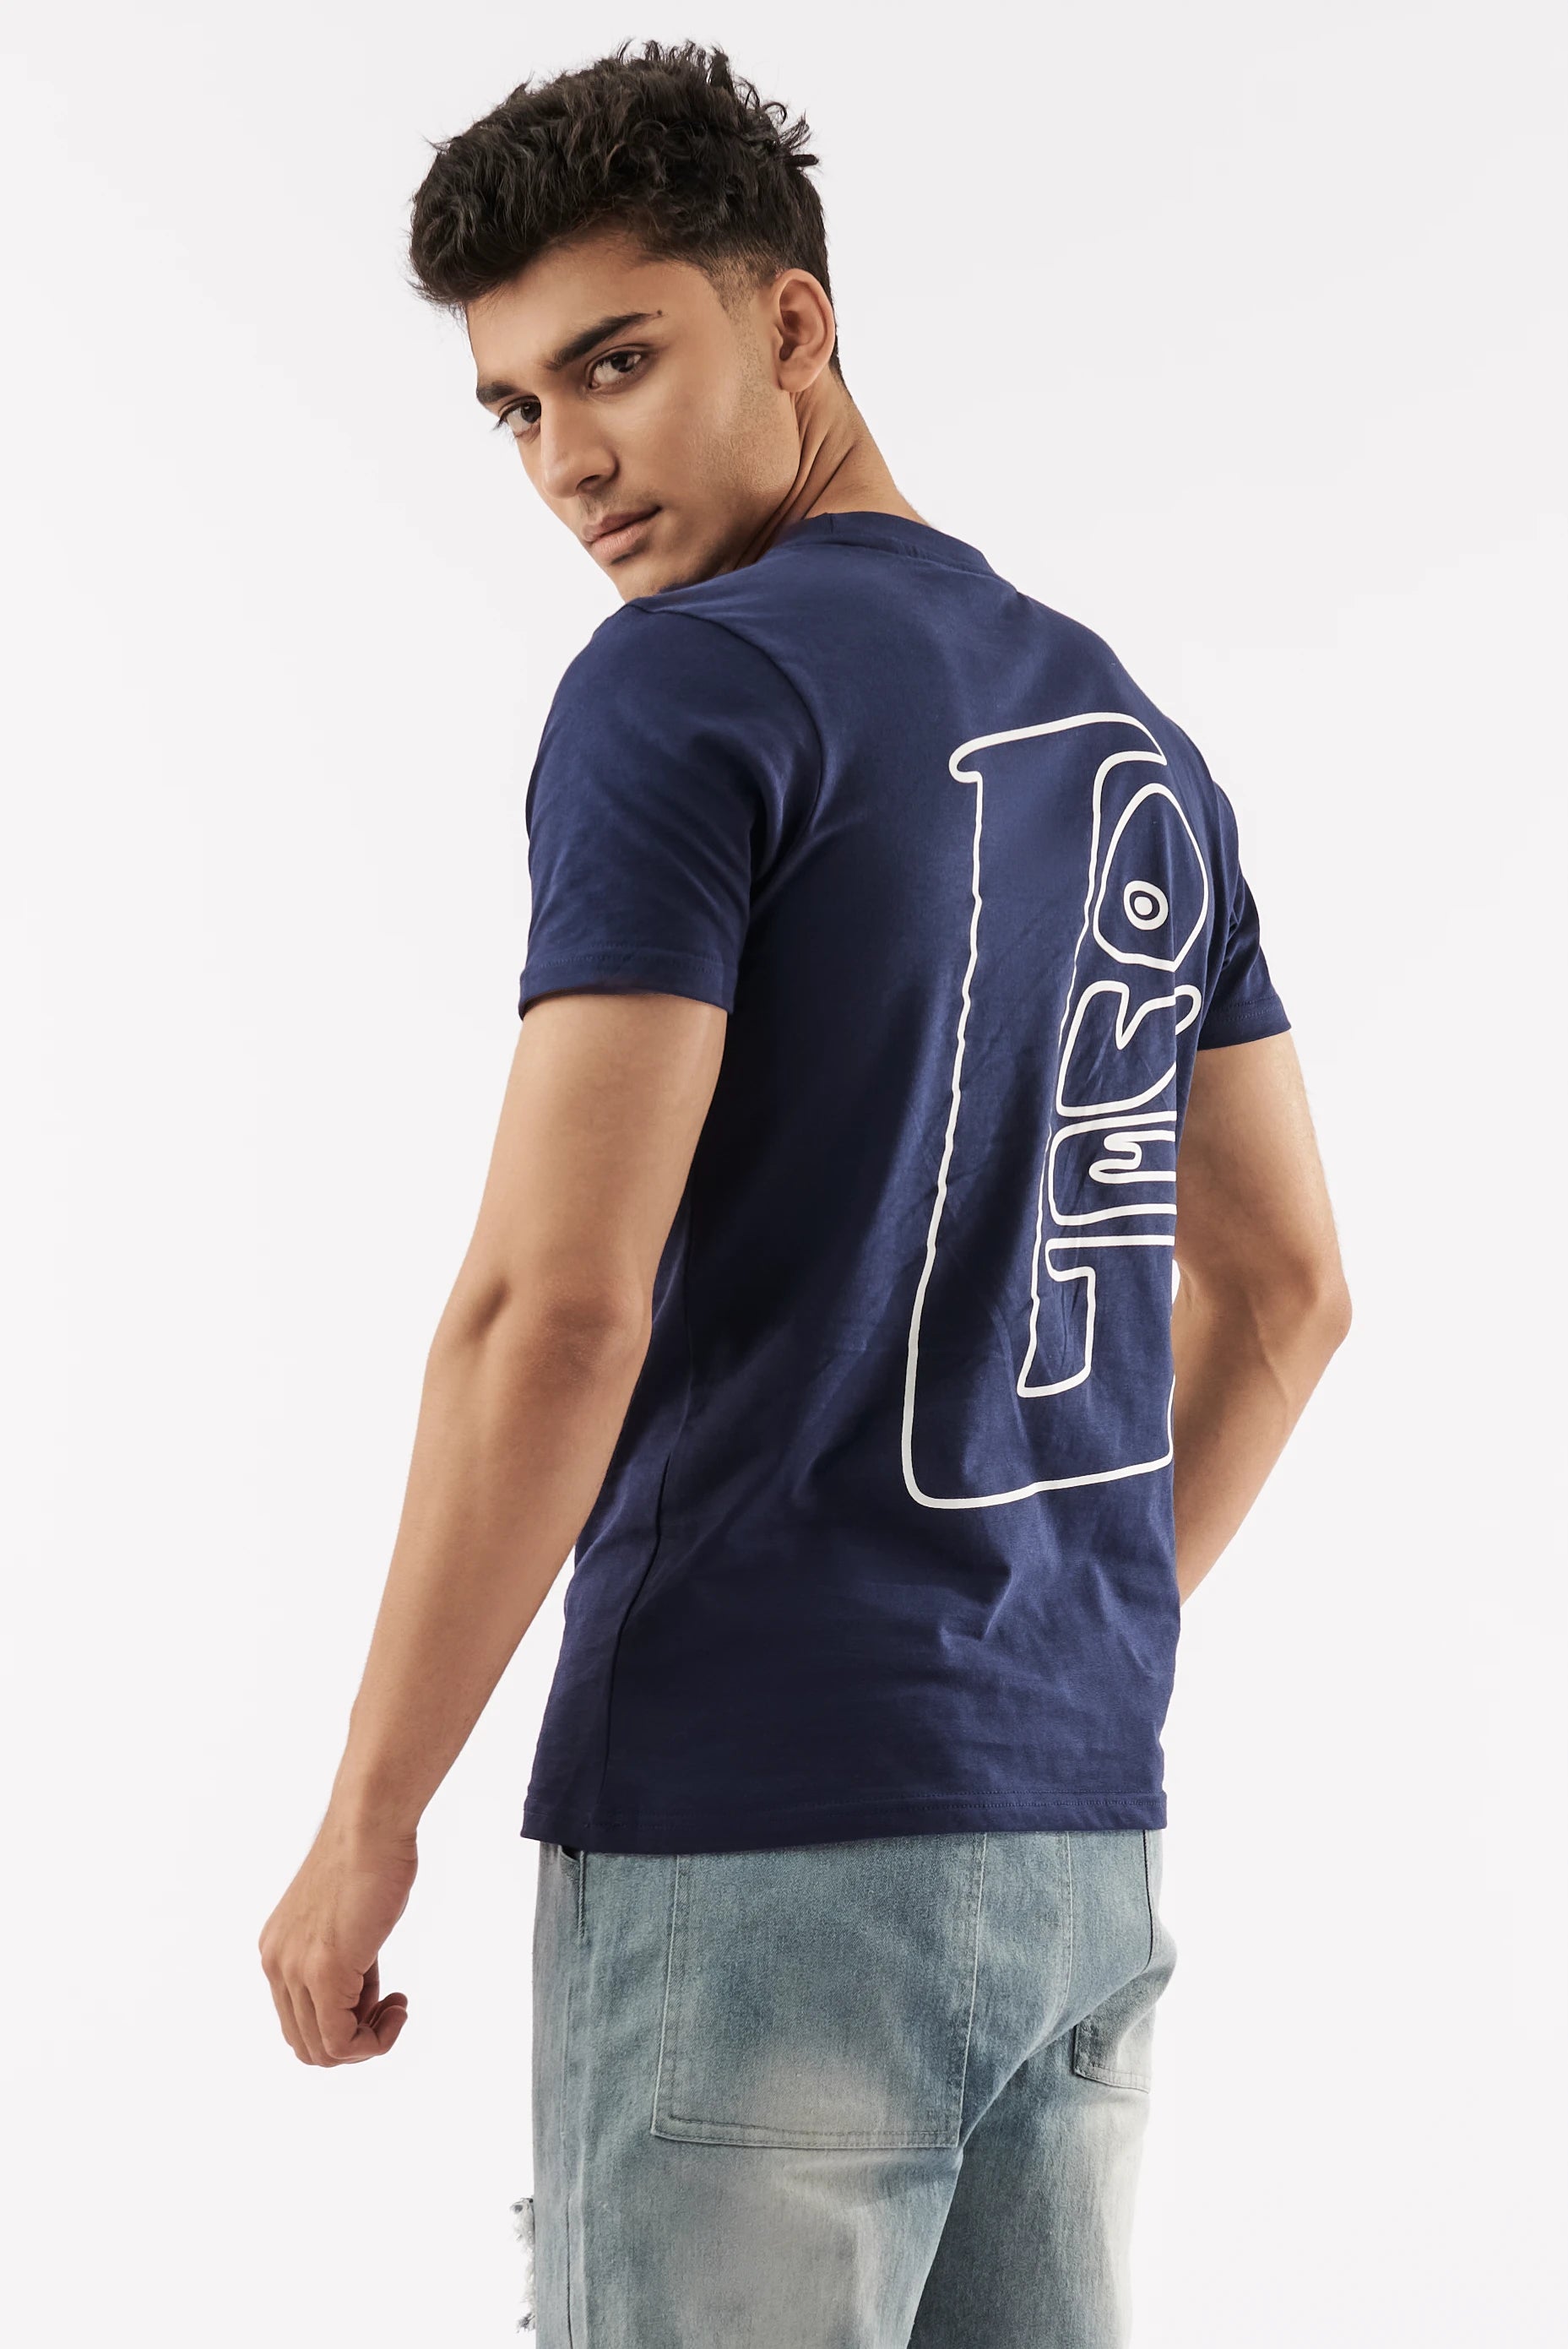 Men's Screen Print T-Shirt Navy